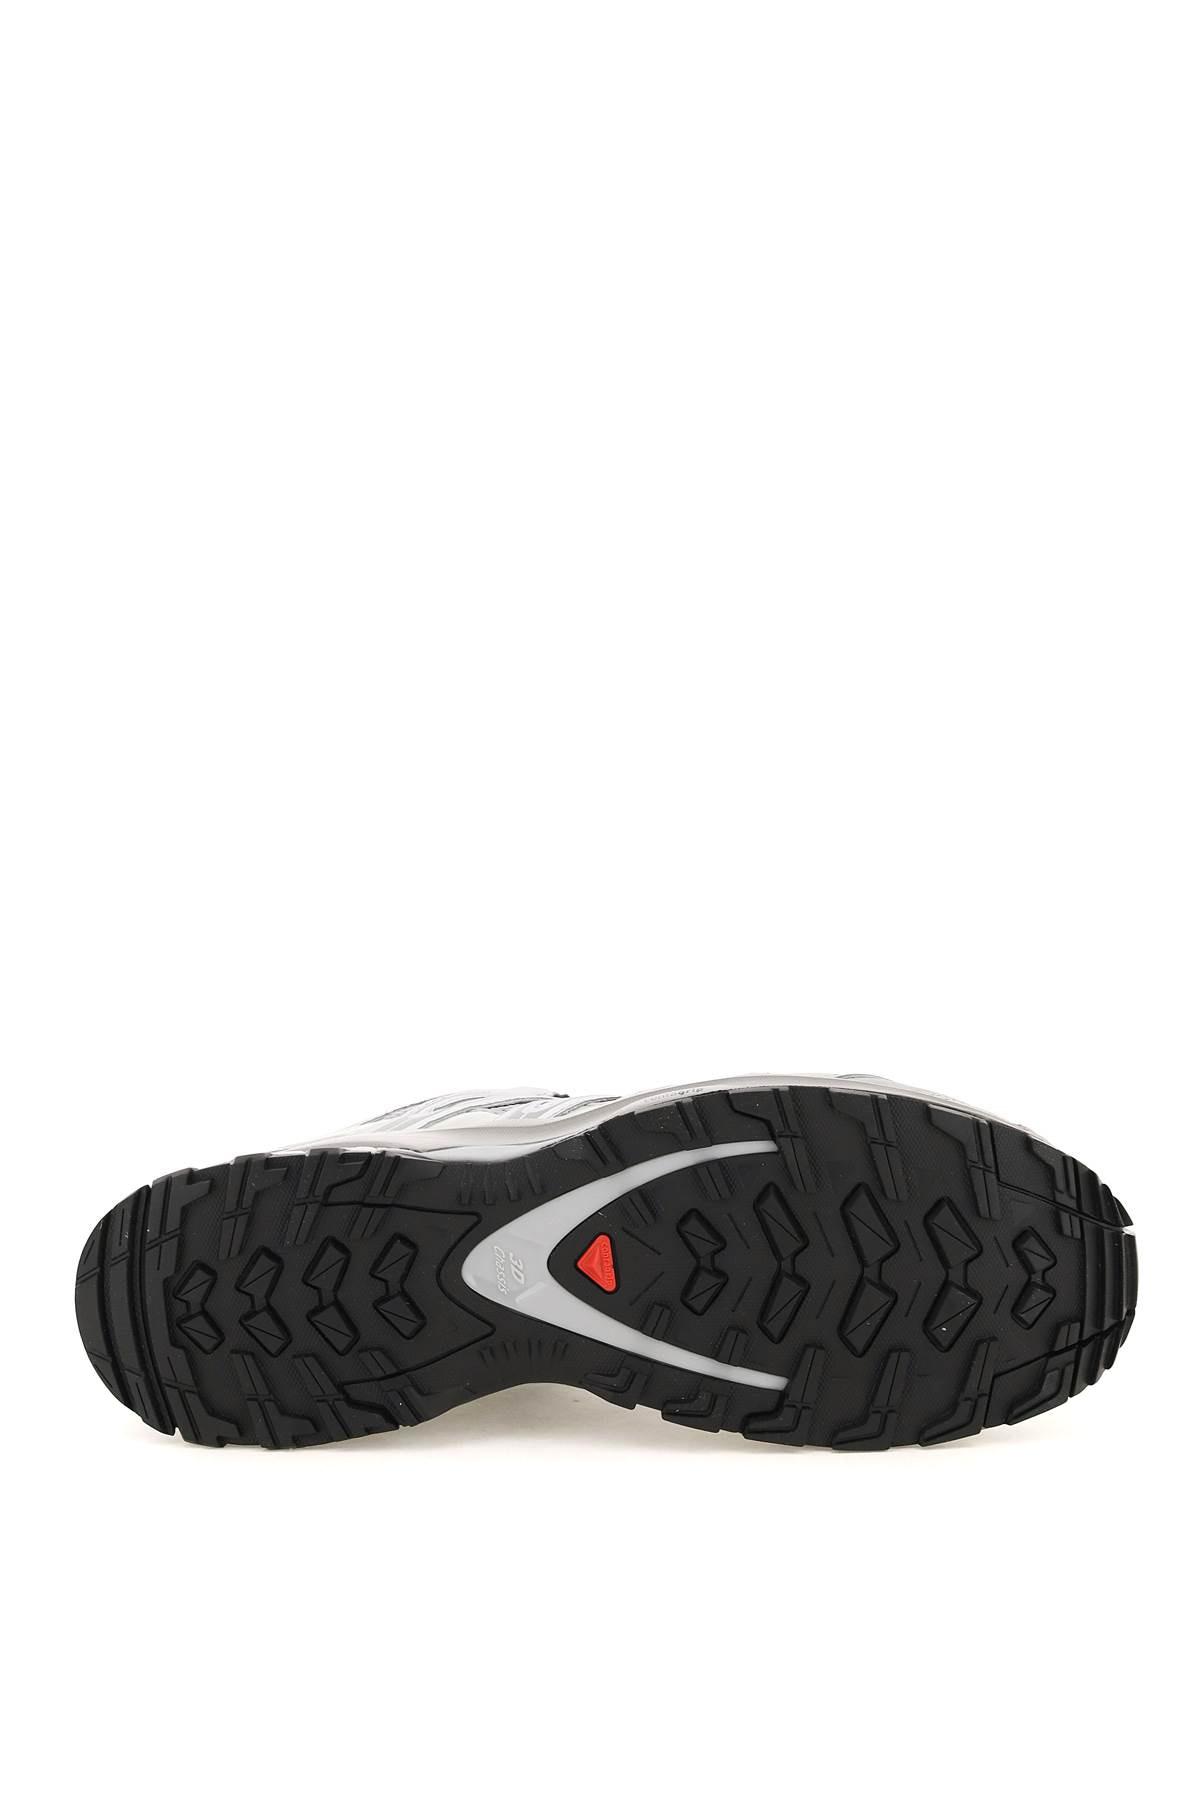 Salomon Rubber Xa Pro 3d Trail Running Shoes in Grey,Silver (Gray) for Men  | Lyst